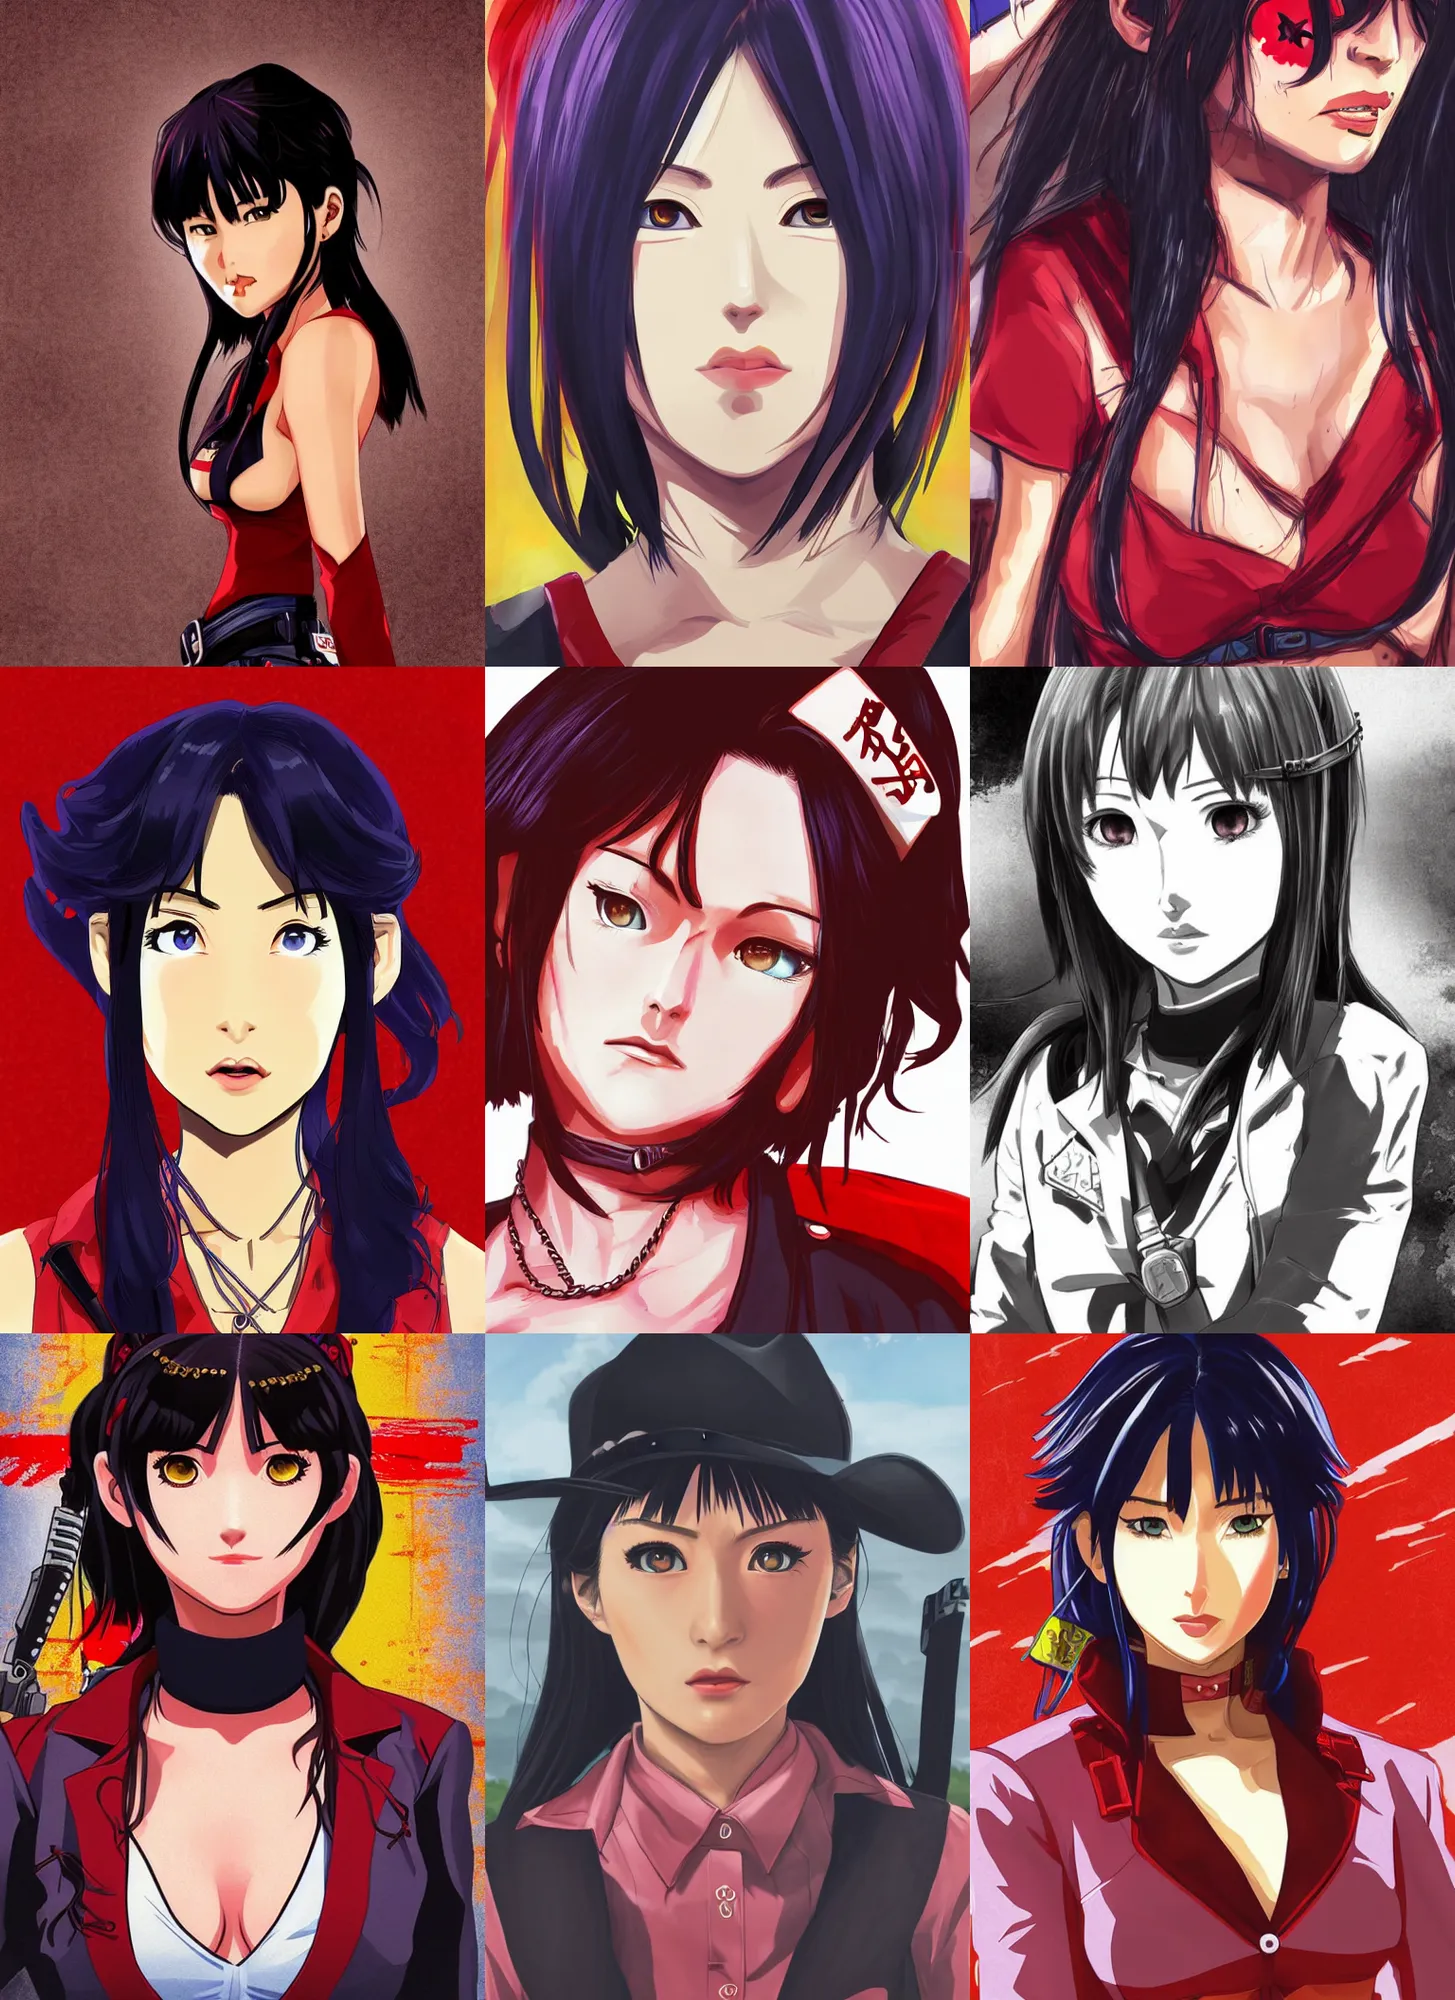 Prompt: misato katsuragi, red dead redemption art style, rockstar games art, semi realistic anime, portrait, beautiful face, symmetrical face